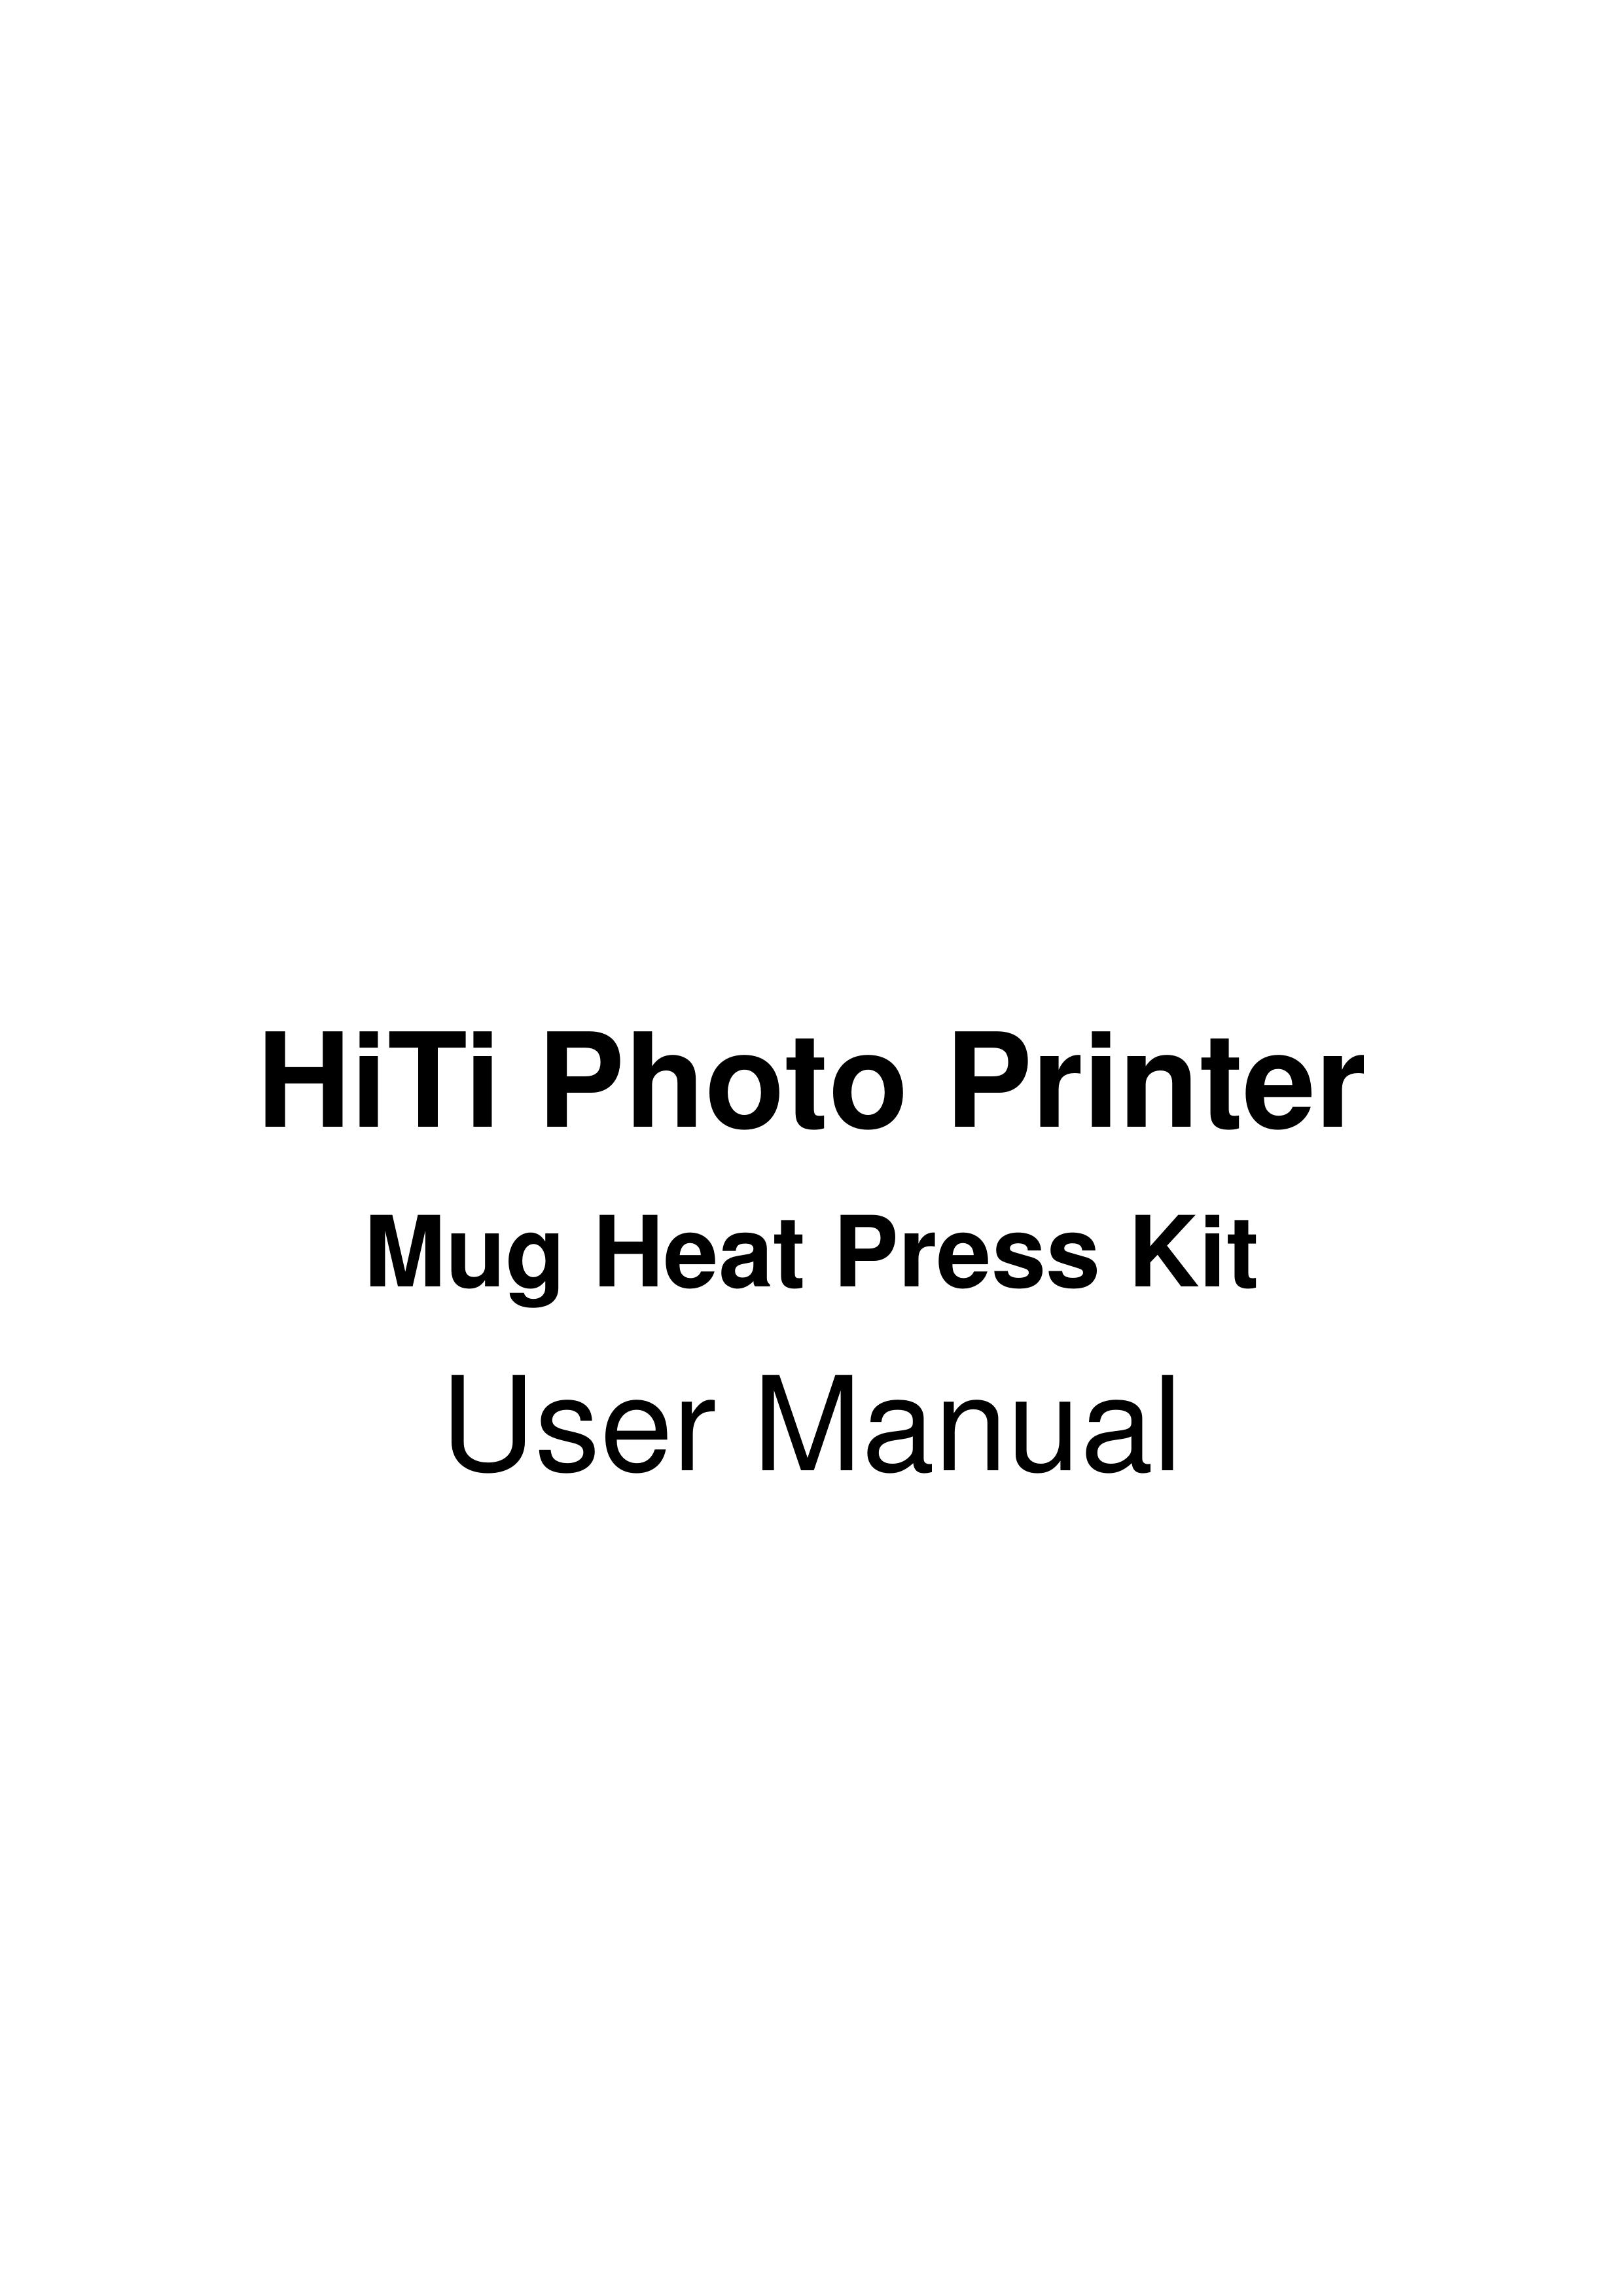 Hi-Touch Imaging Technologies Mug Heat Press Kit Photo Printer User Manual